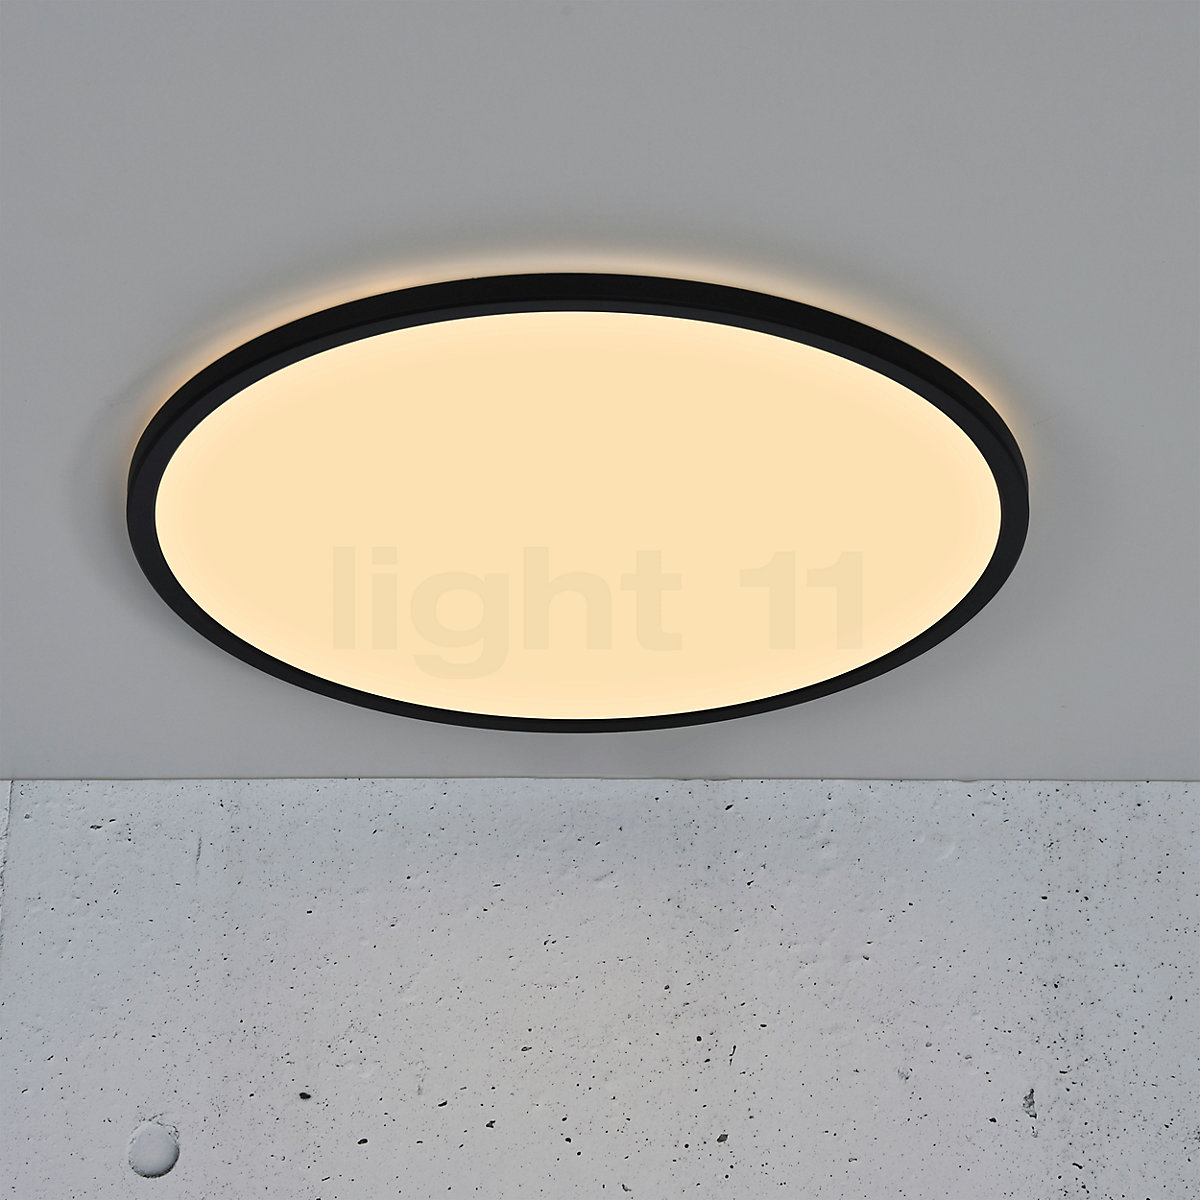 LED Light Smart Buy at Ceiling Nordlux Oja